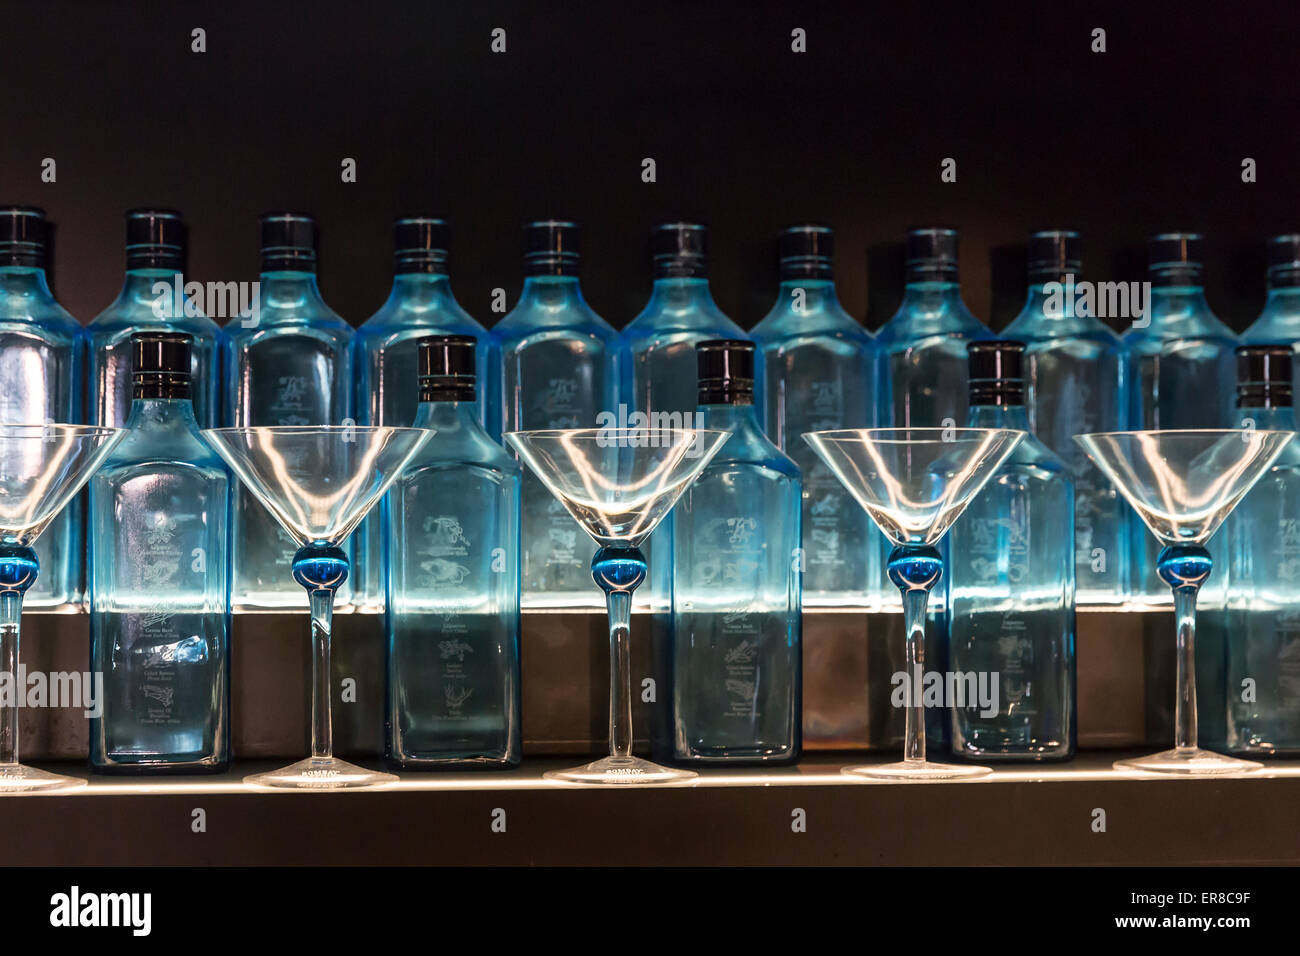 Boutique de Gin Bombay Sapphire, Distillery Visitor Centre, Laverstoke, Hampshire, England, UK. Banque D'Images